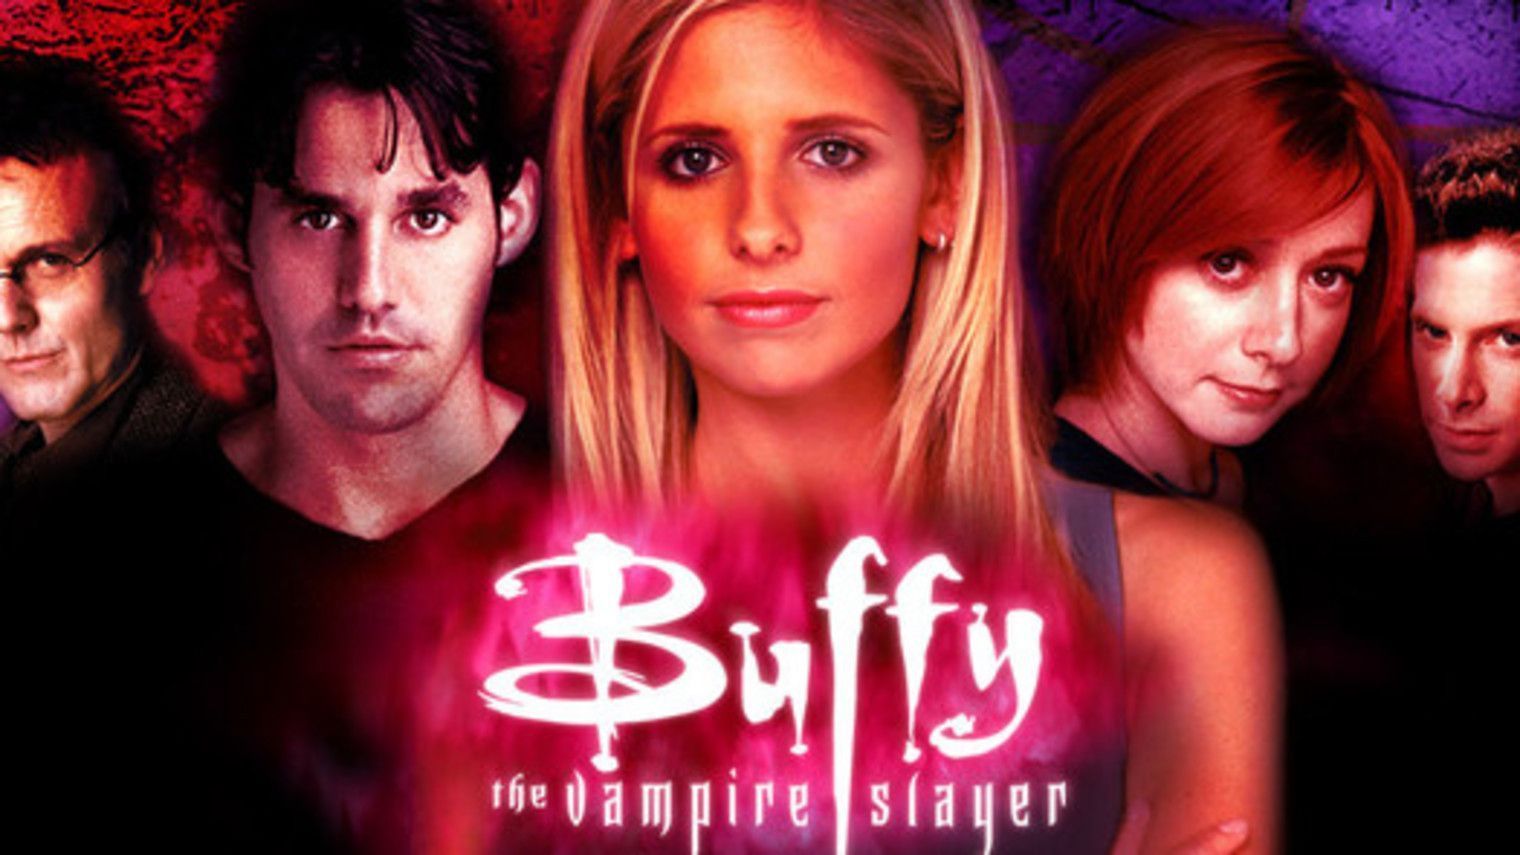 On a toutes aimé Buffy contre les vampires